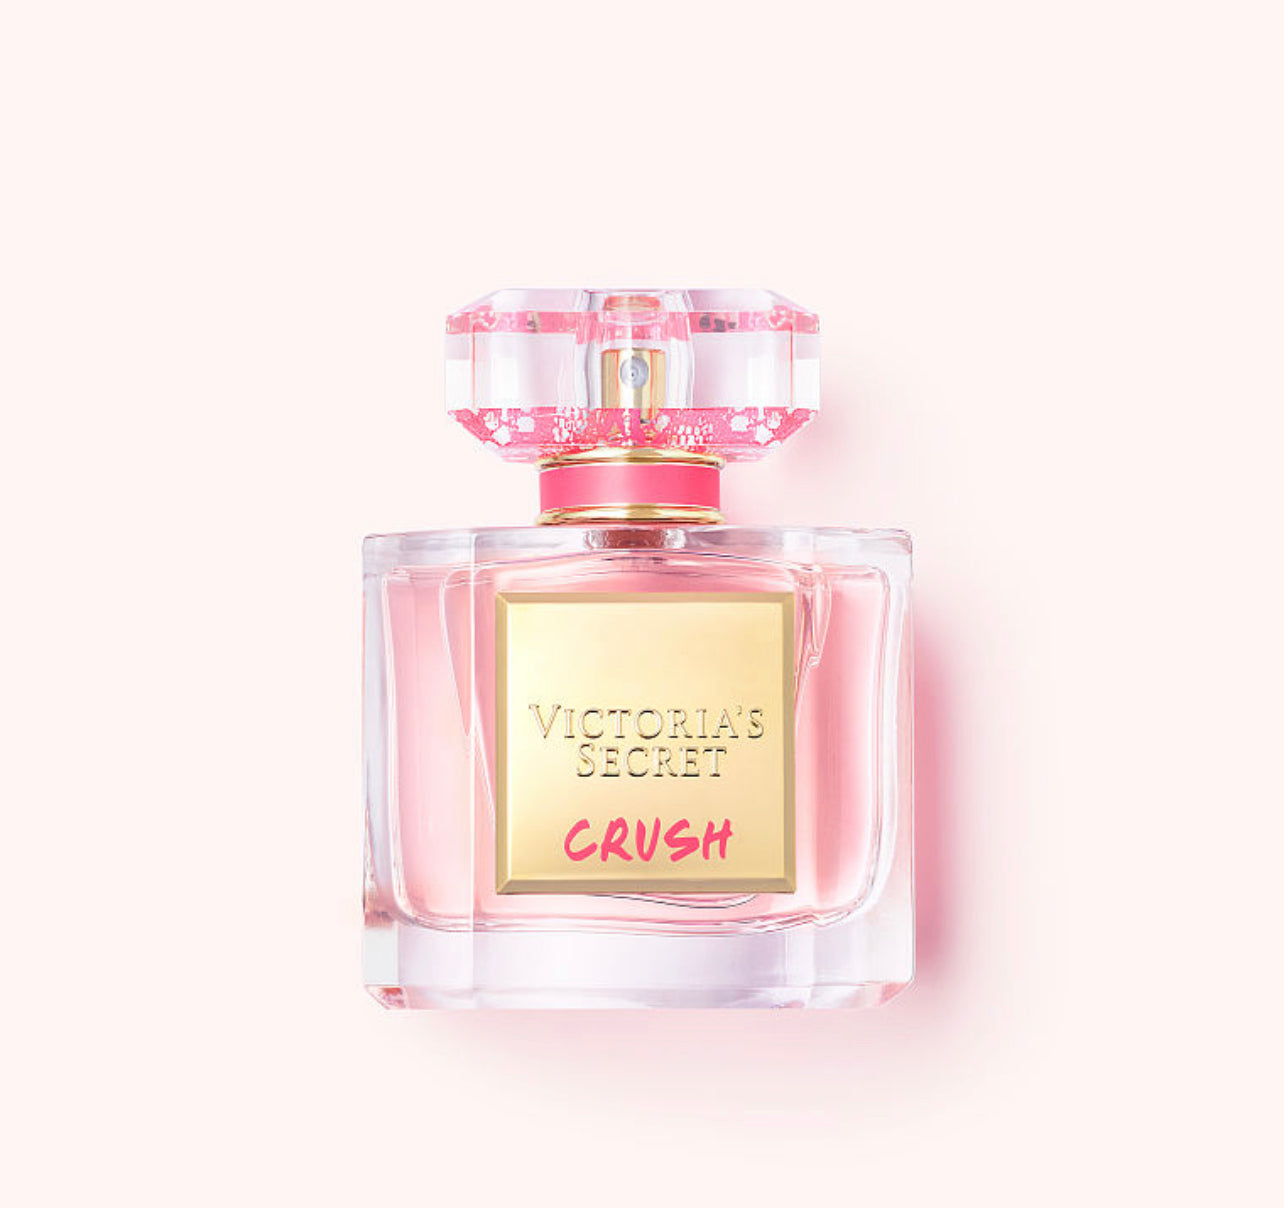 ,,Victoria’s Secret Crush” Fragrance